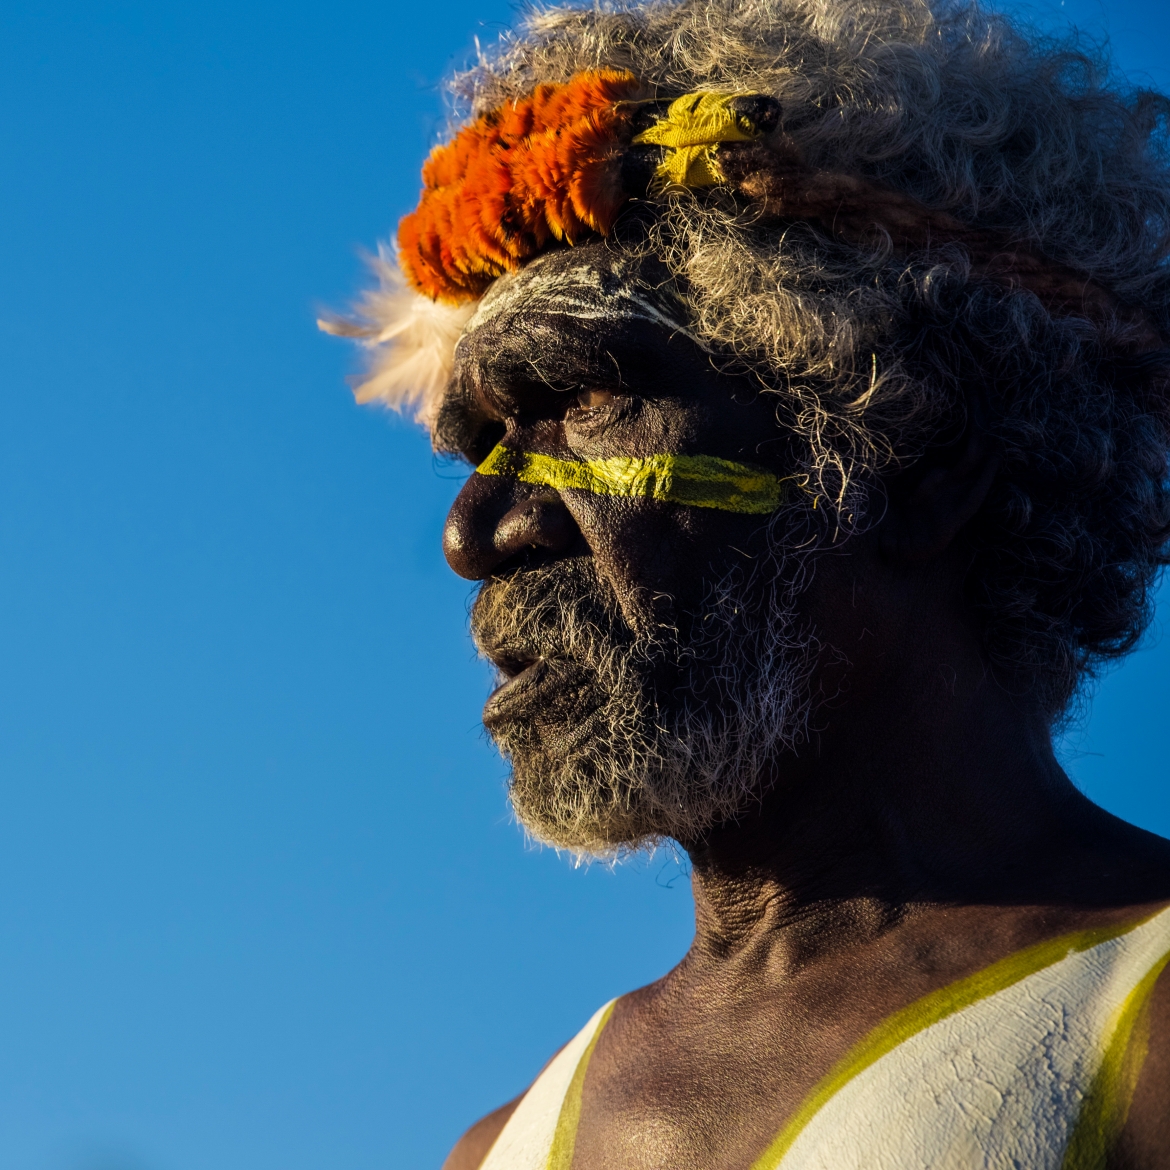 Aboriginal man at Uluru in 2017